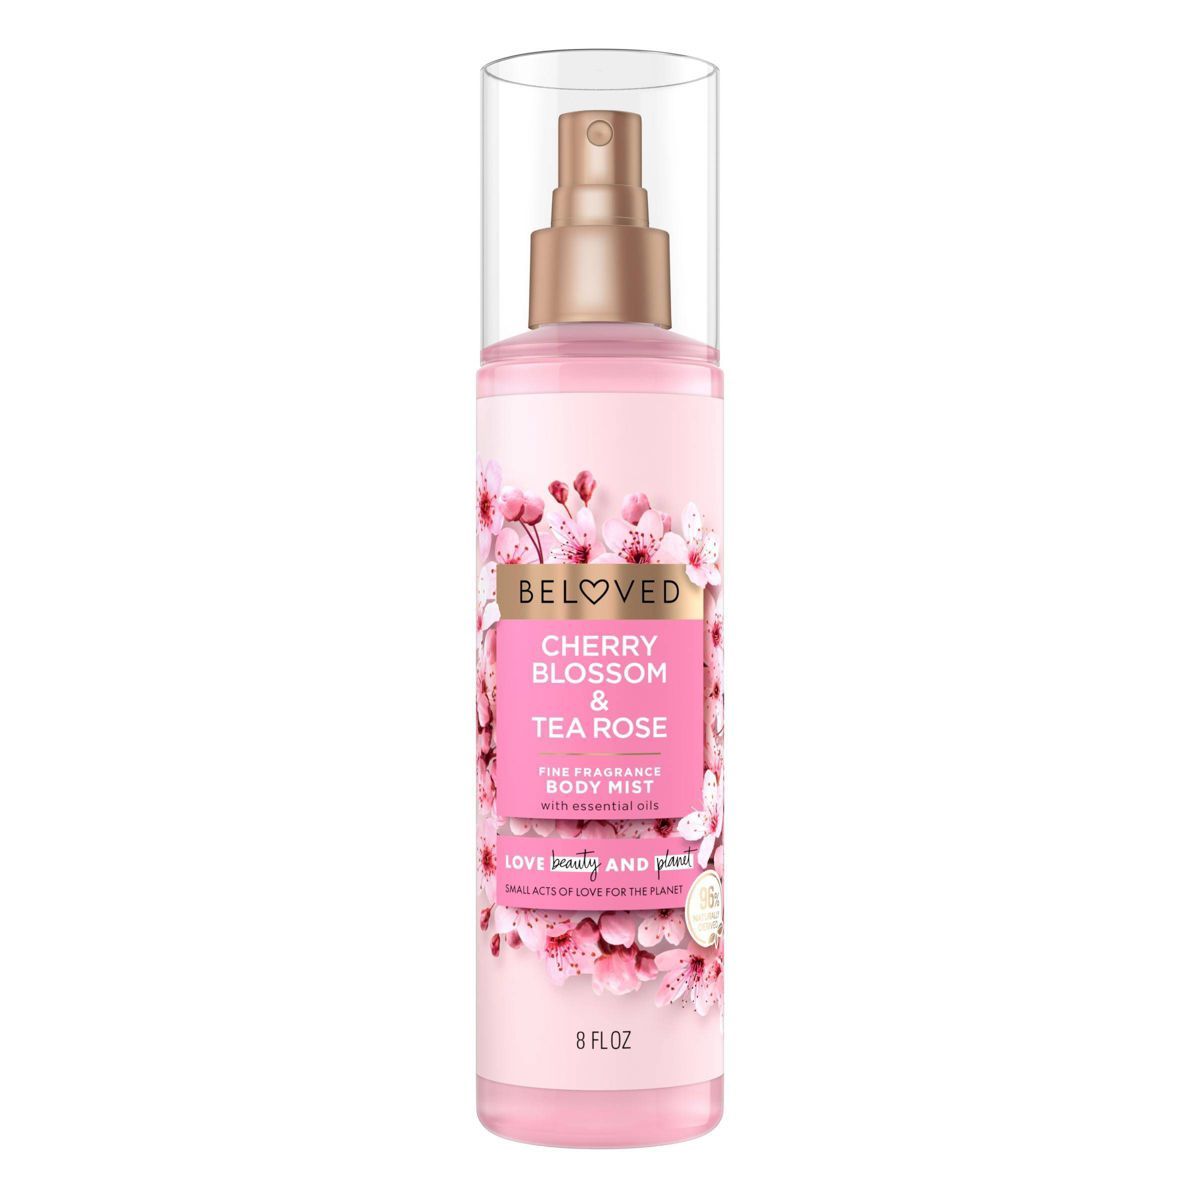 Beloved Cherry Blossom & Tea Rose Body Mist - 8 fl oz | Target